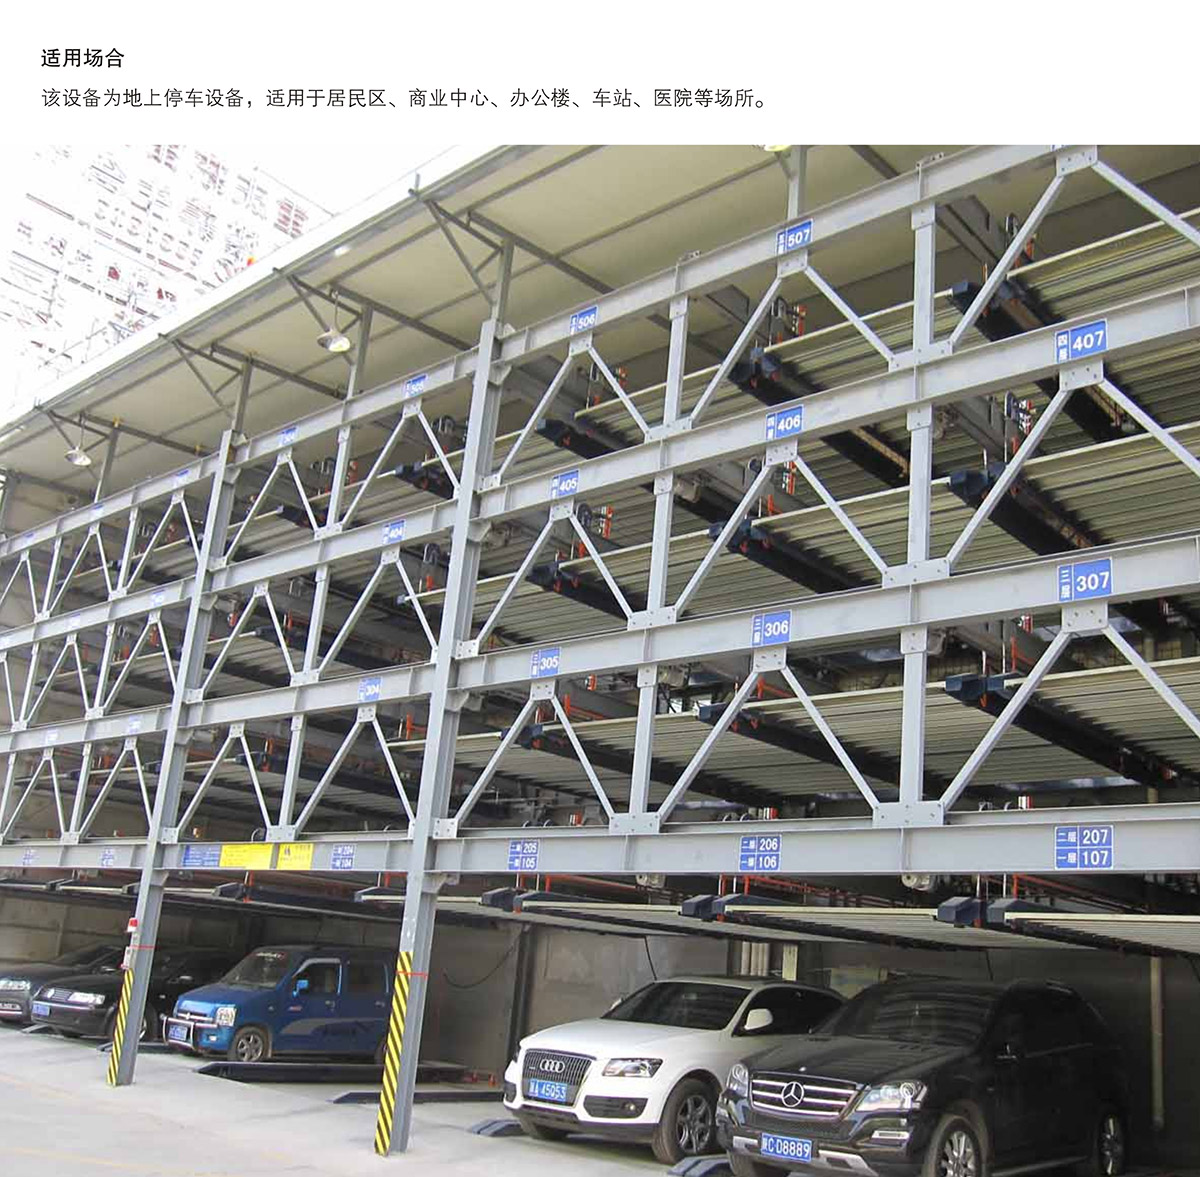 09PSH4-6四至六层升降横移机械式立体停车设备适用场合.jpg